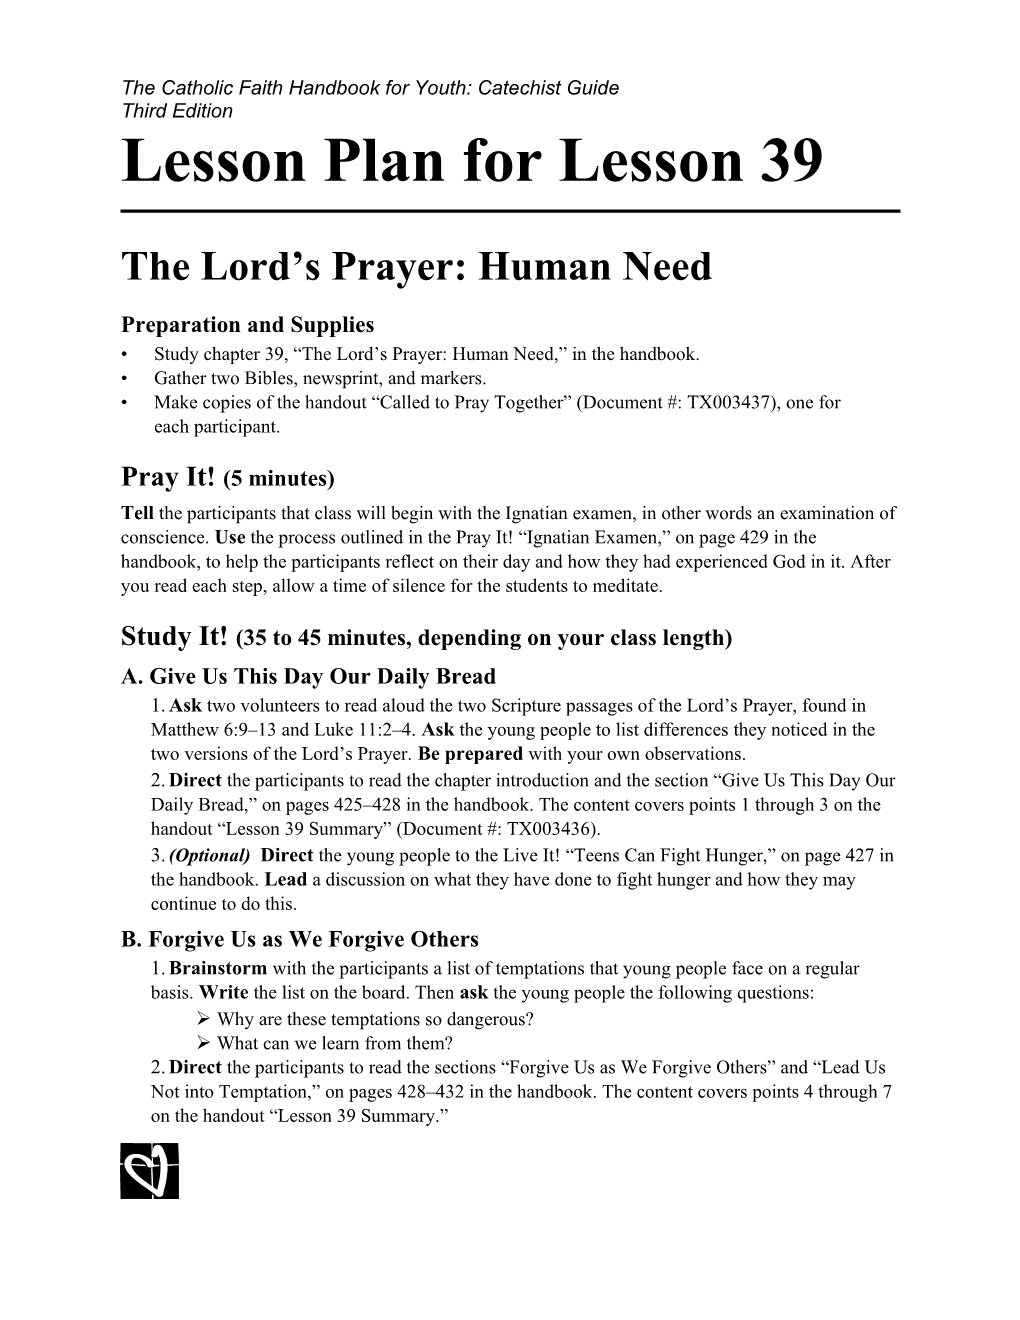 Lesson Plan for Lesson 39